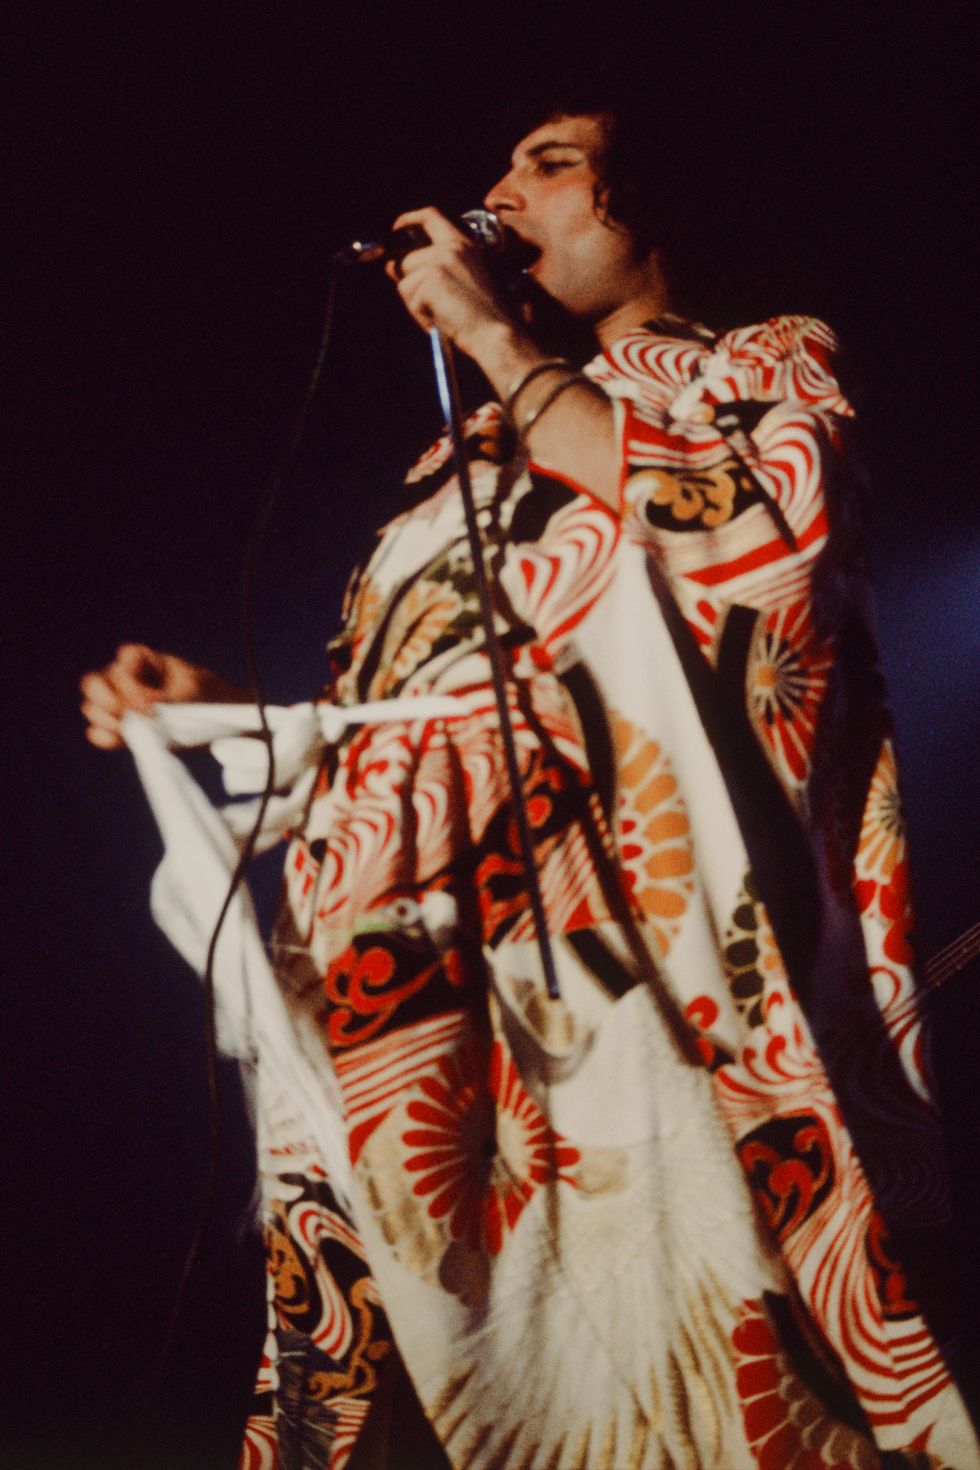 Queen Live At Nippon Budokan Freddie Mercury In Kimono　V&Aミュージアム　きもの展